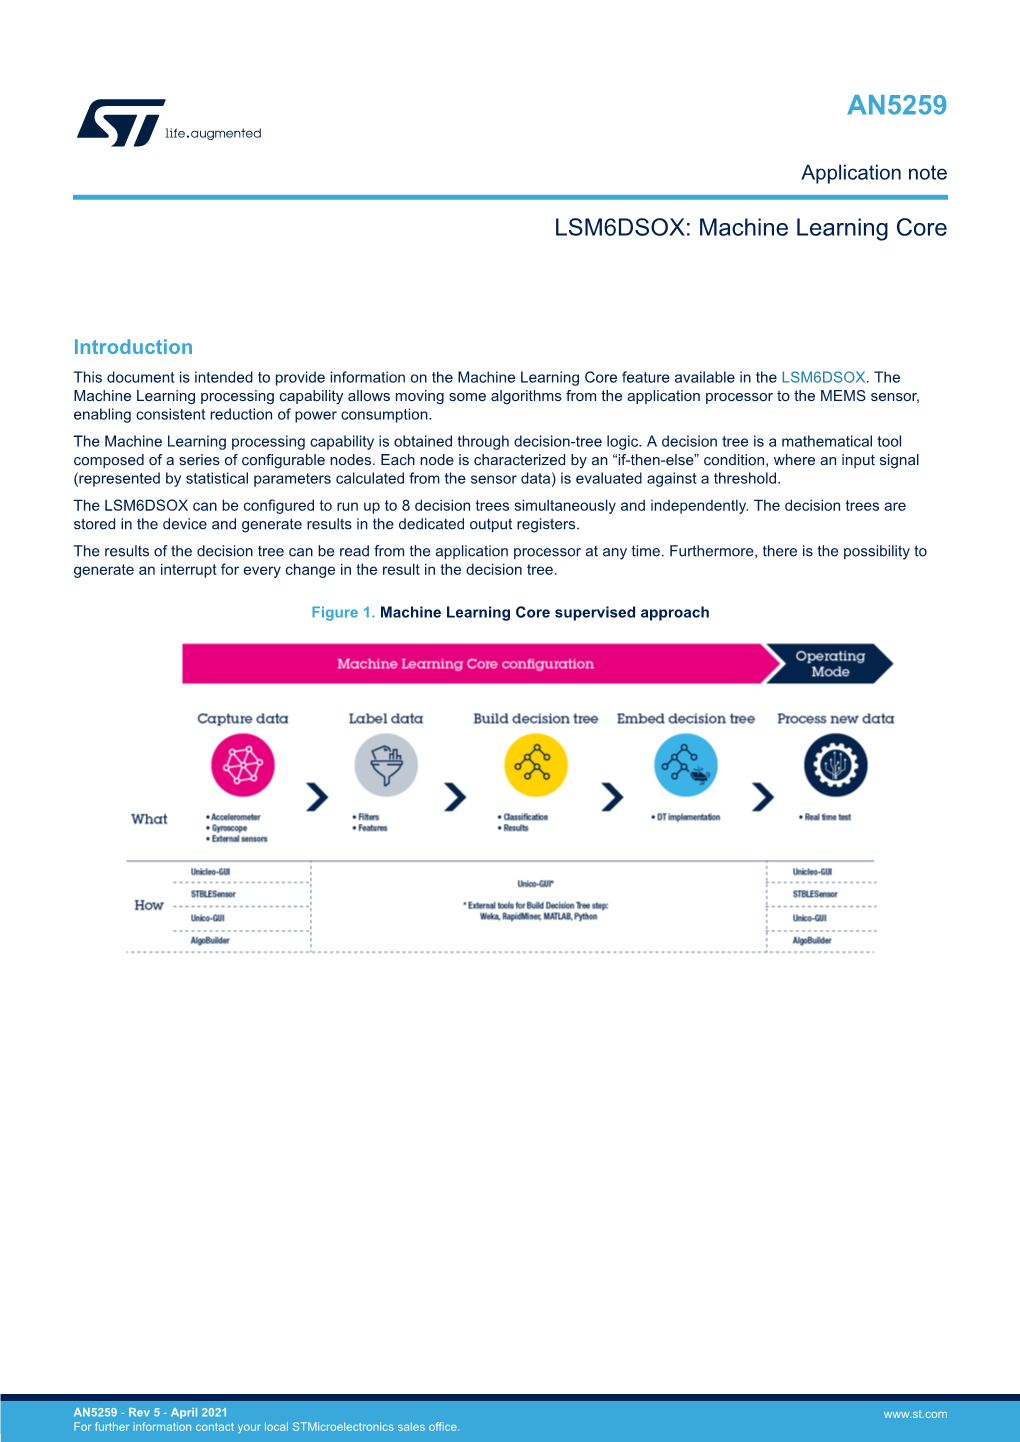 LSM6DSOX: Machine Learning Core